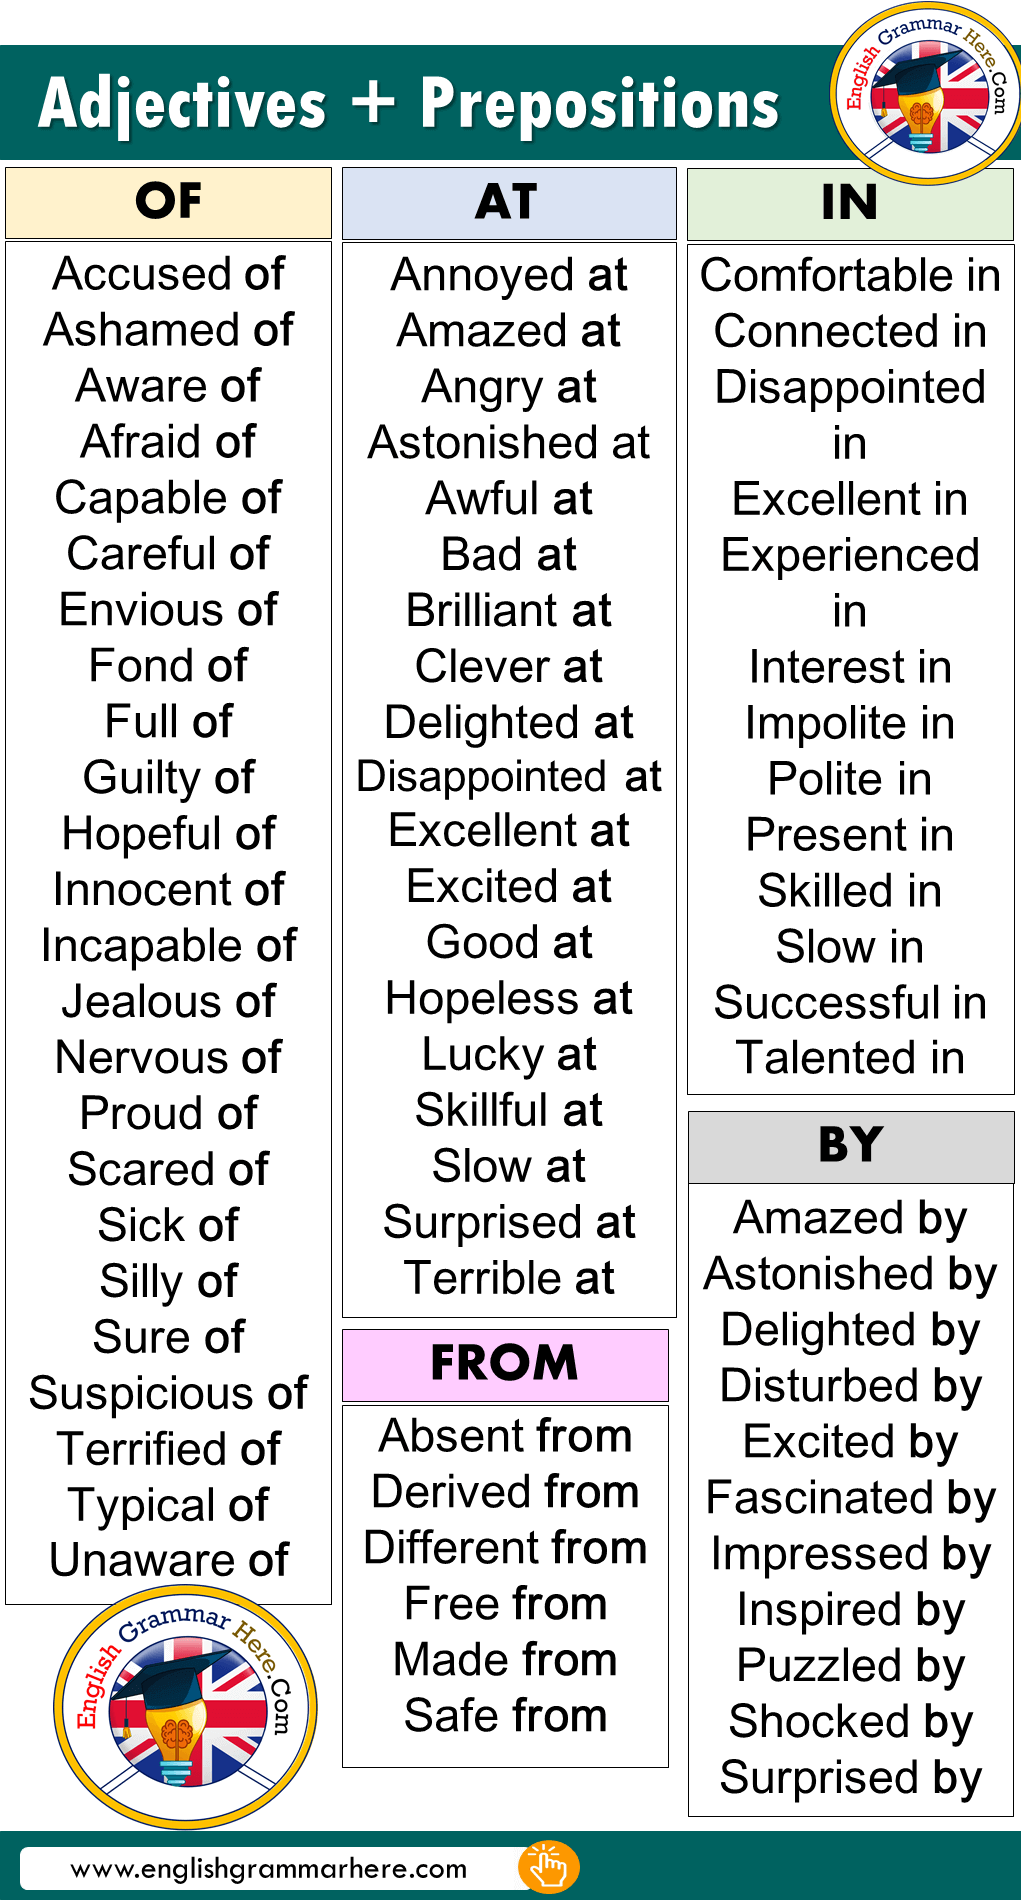 English Mosy Common Adjectives + Prepositions List